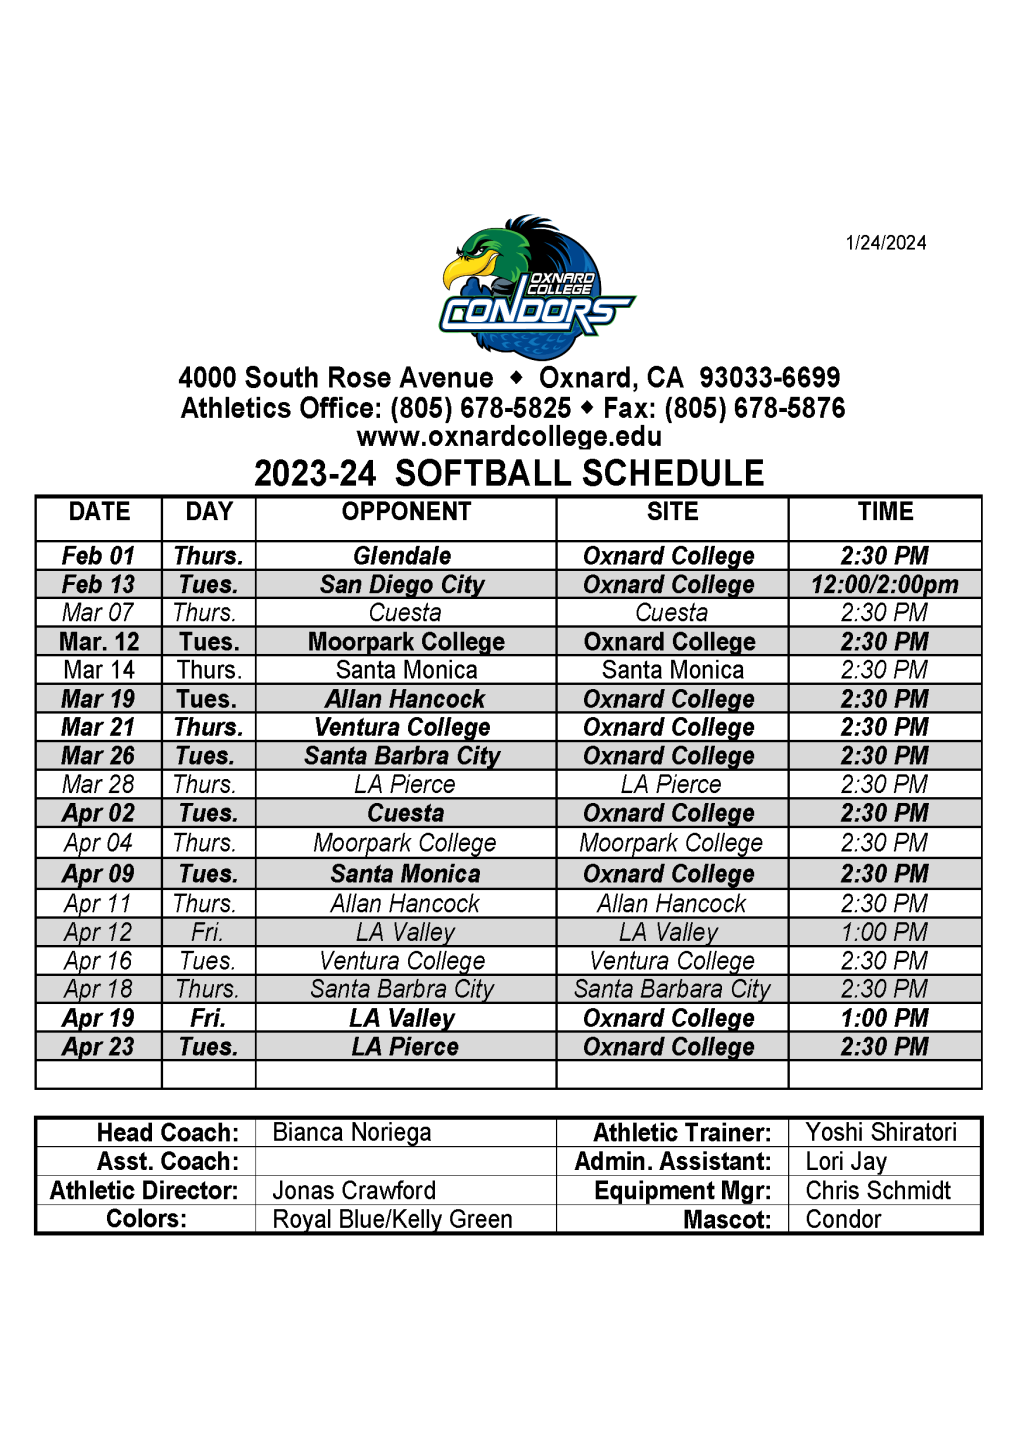 OC Softball Schedule